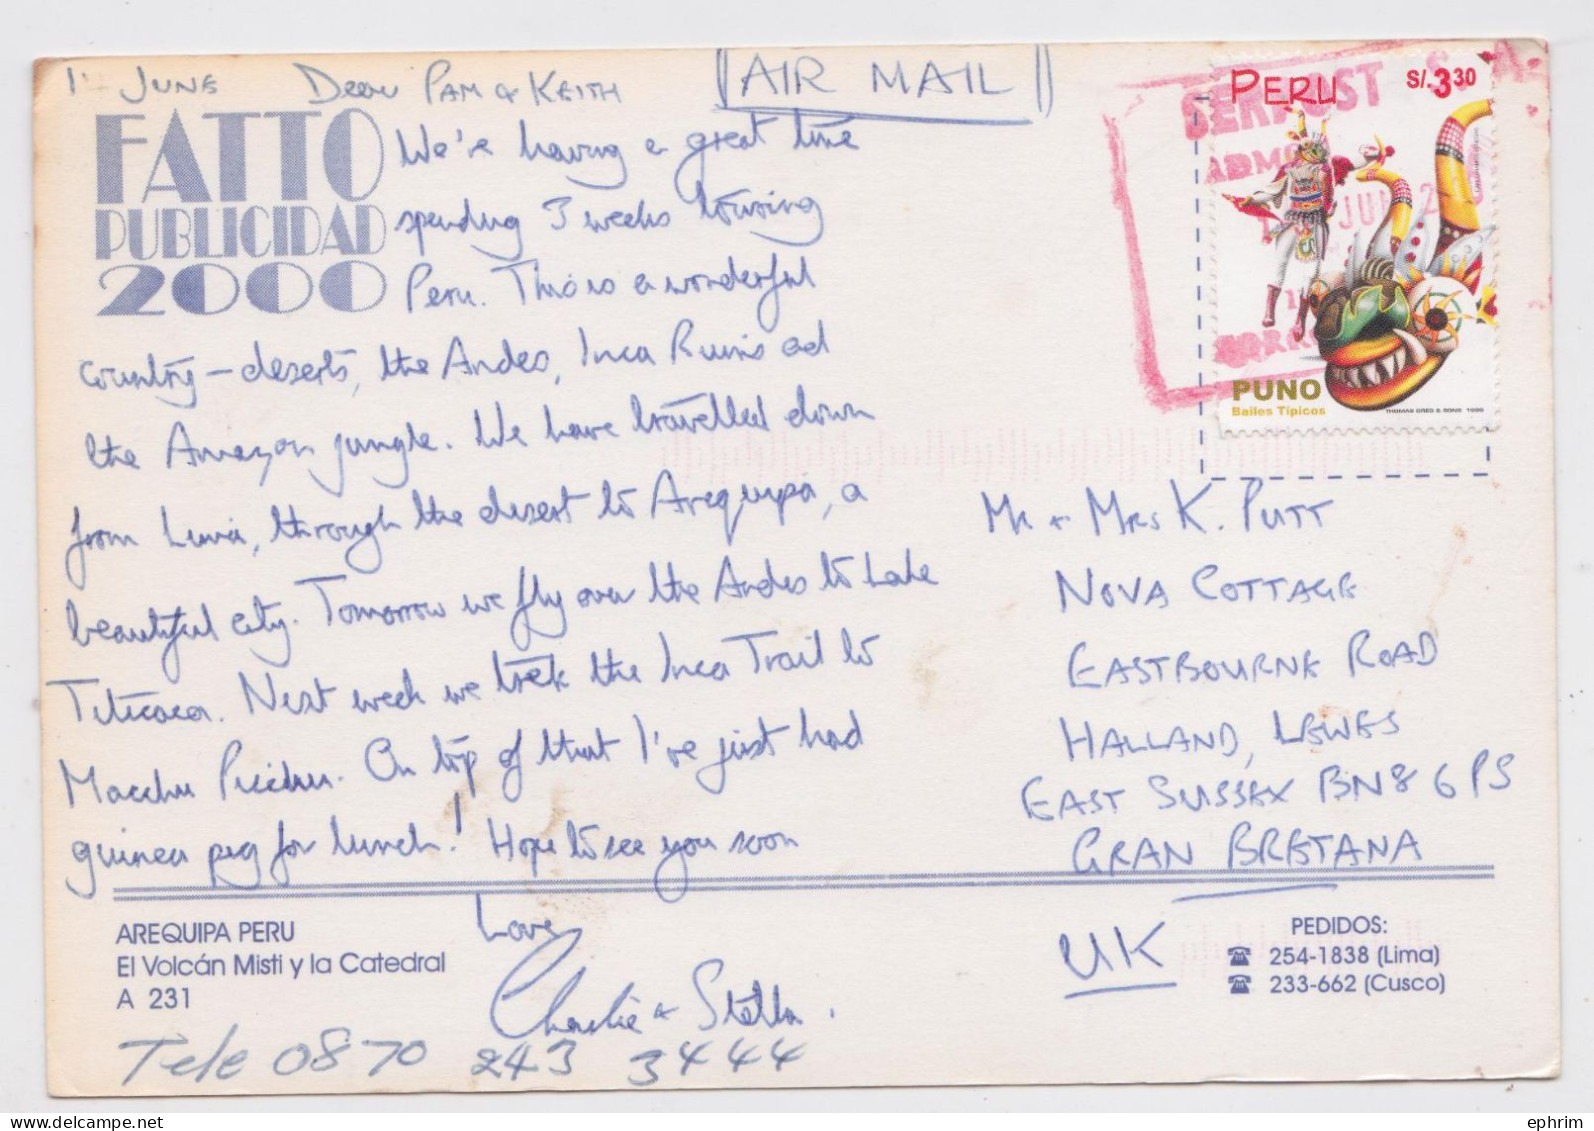 Pérou Peru Carte Postale Timbre Sello Bailes Tipicos Stamp Air Mail Postcard 2000 - Pérou